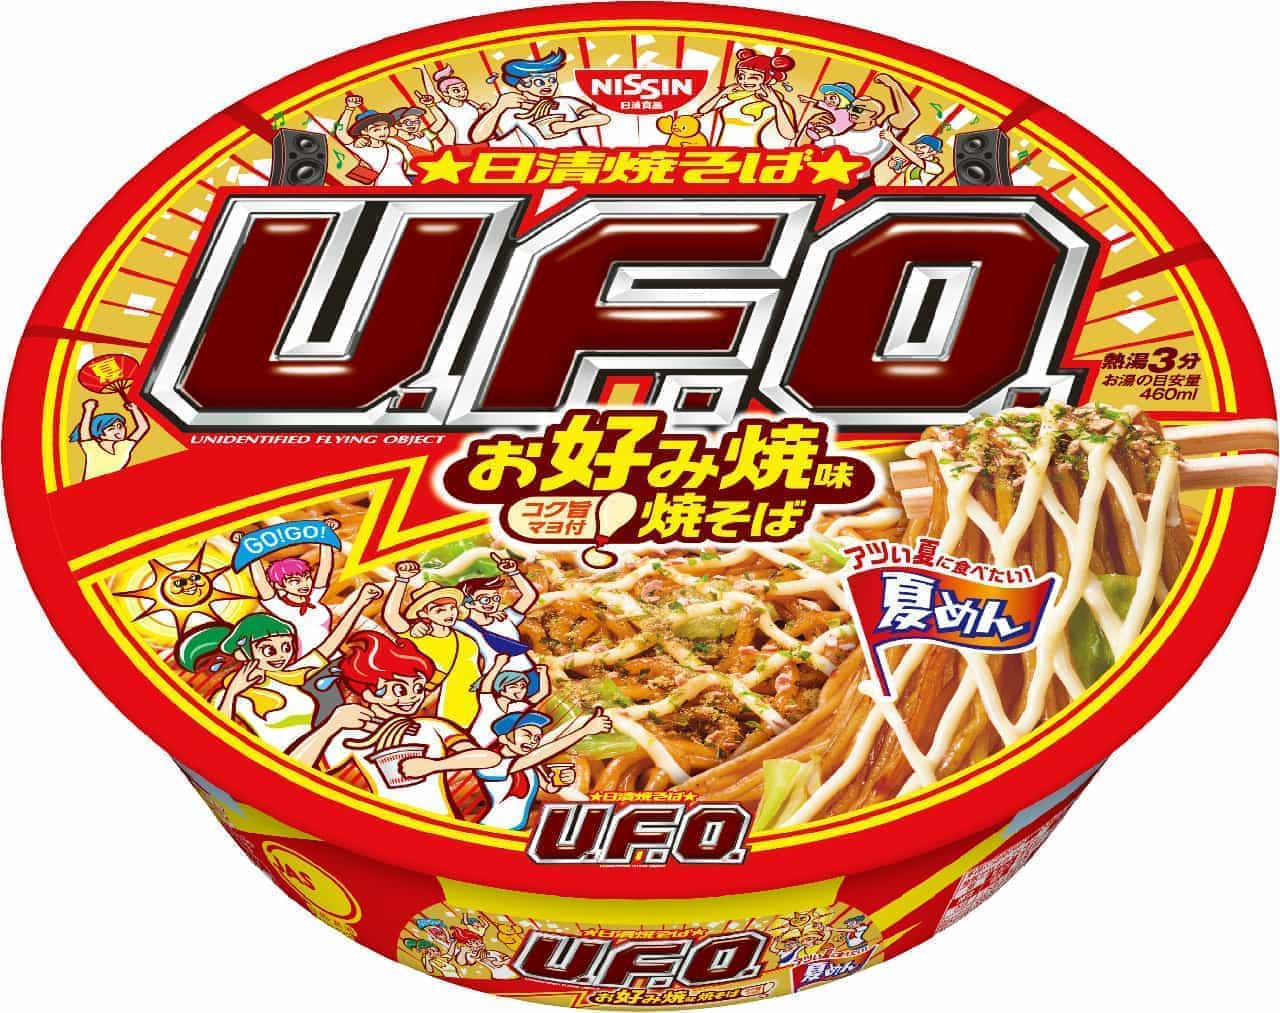 Nissin Foods "Nissin Yakisoba U.F.O. Okonomiyaki Yakisoba"